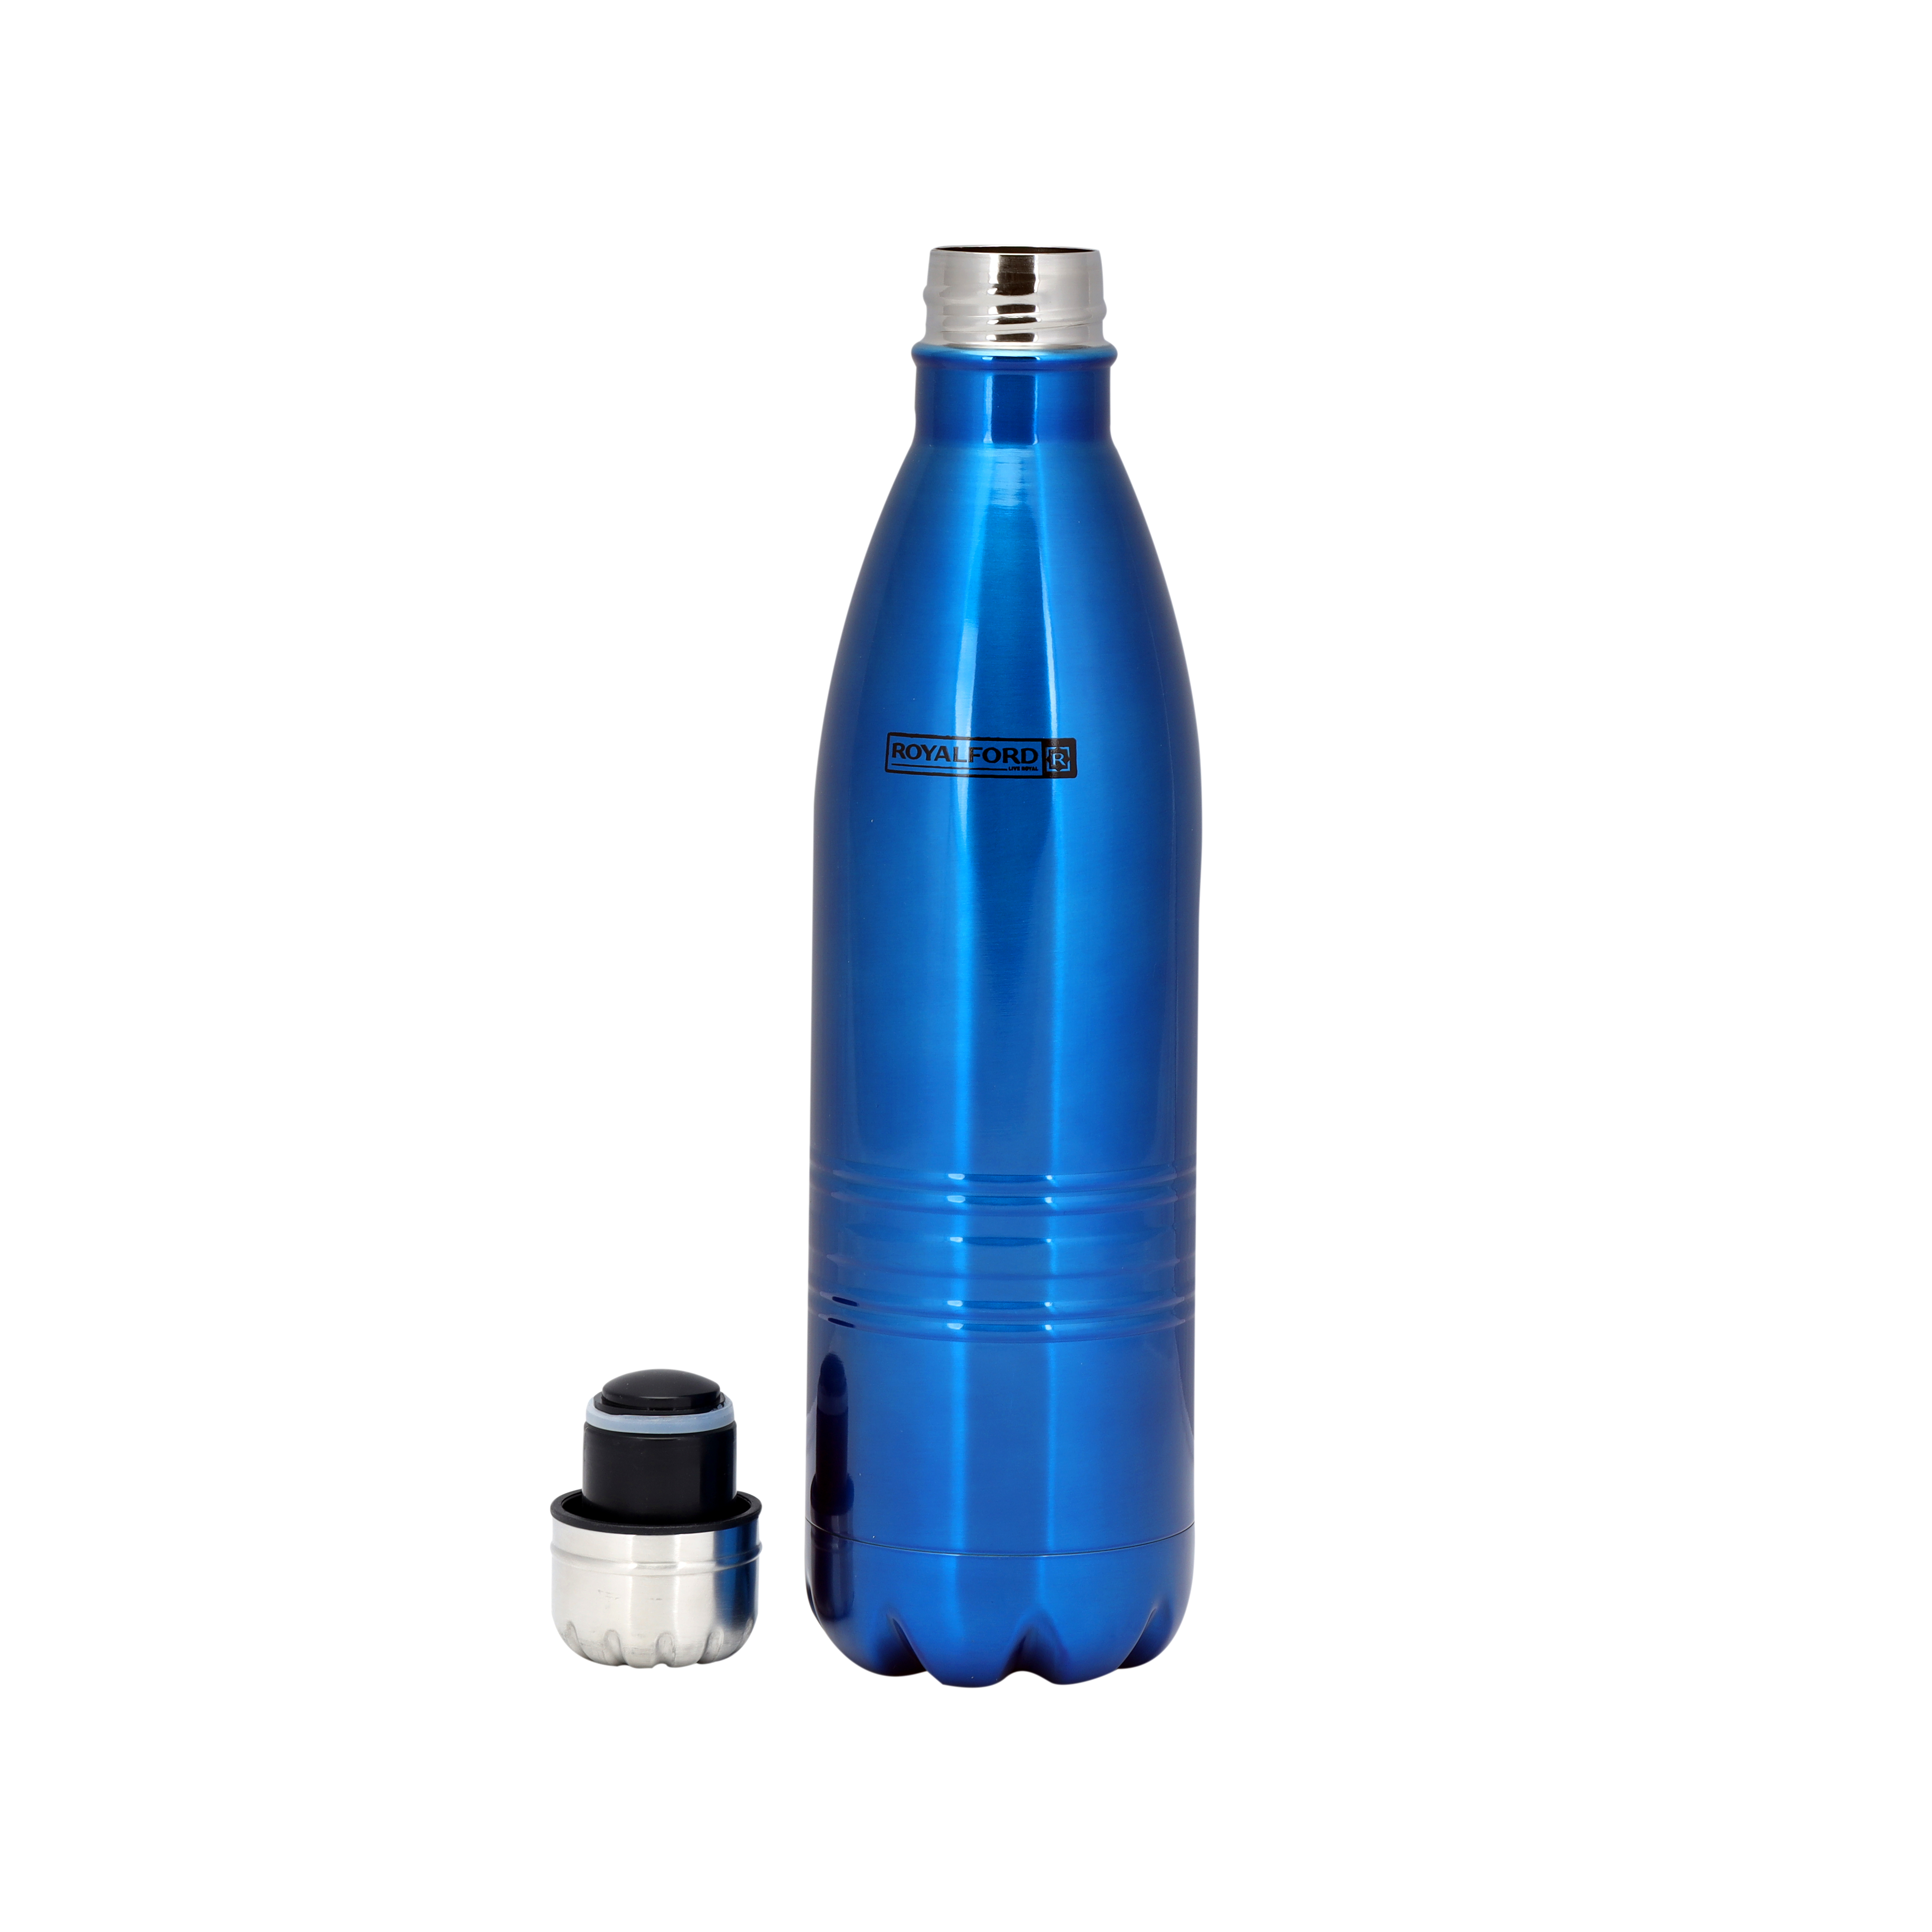 Milton 32 oz. Large Water Bottle 4 Set Sports Water Bottles for Kids Adults Reusable Water Bottle Plastic Wide-Mouth BPA Free Leak-Free Lightweight